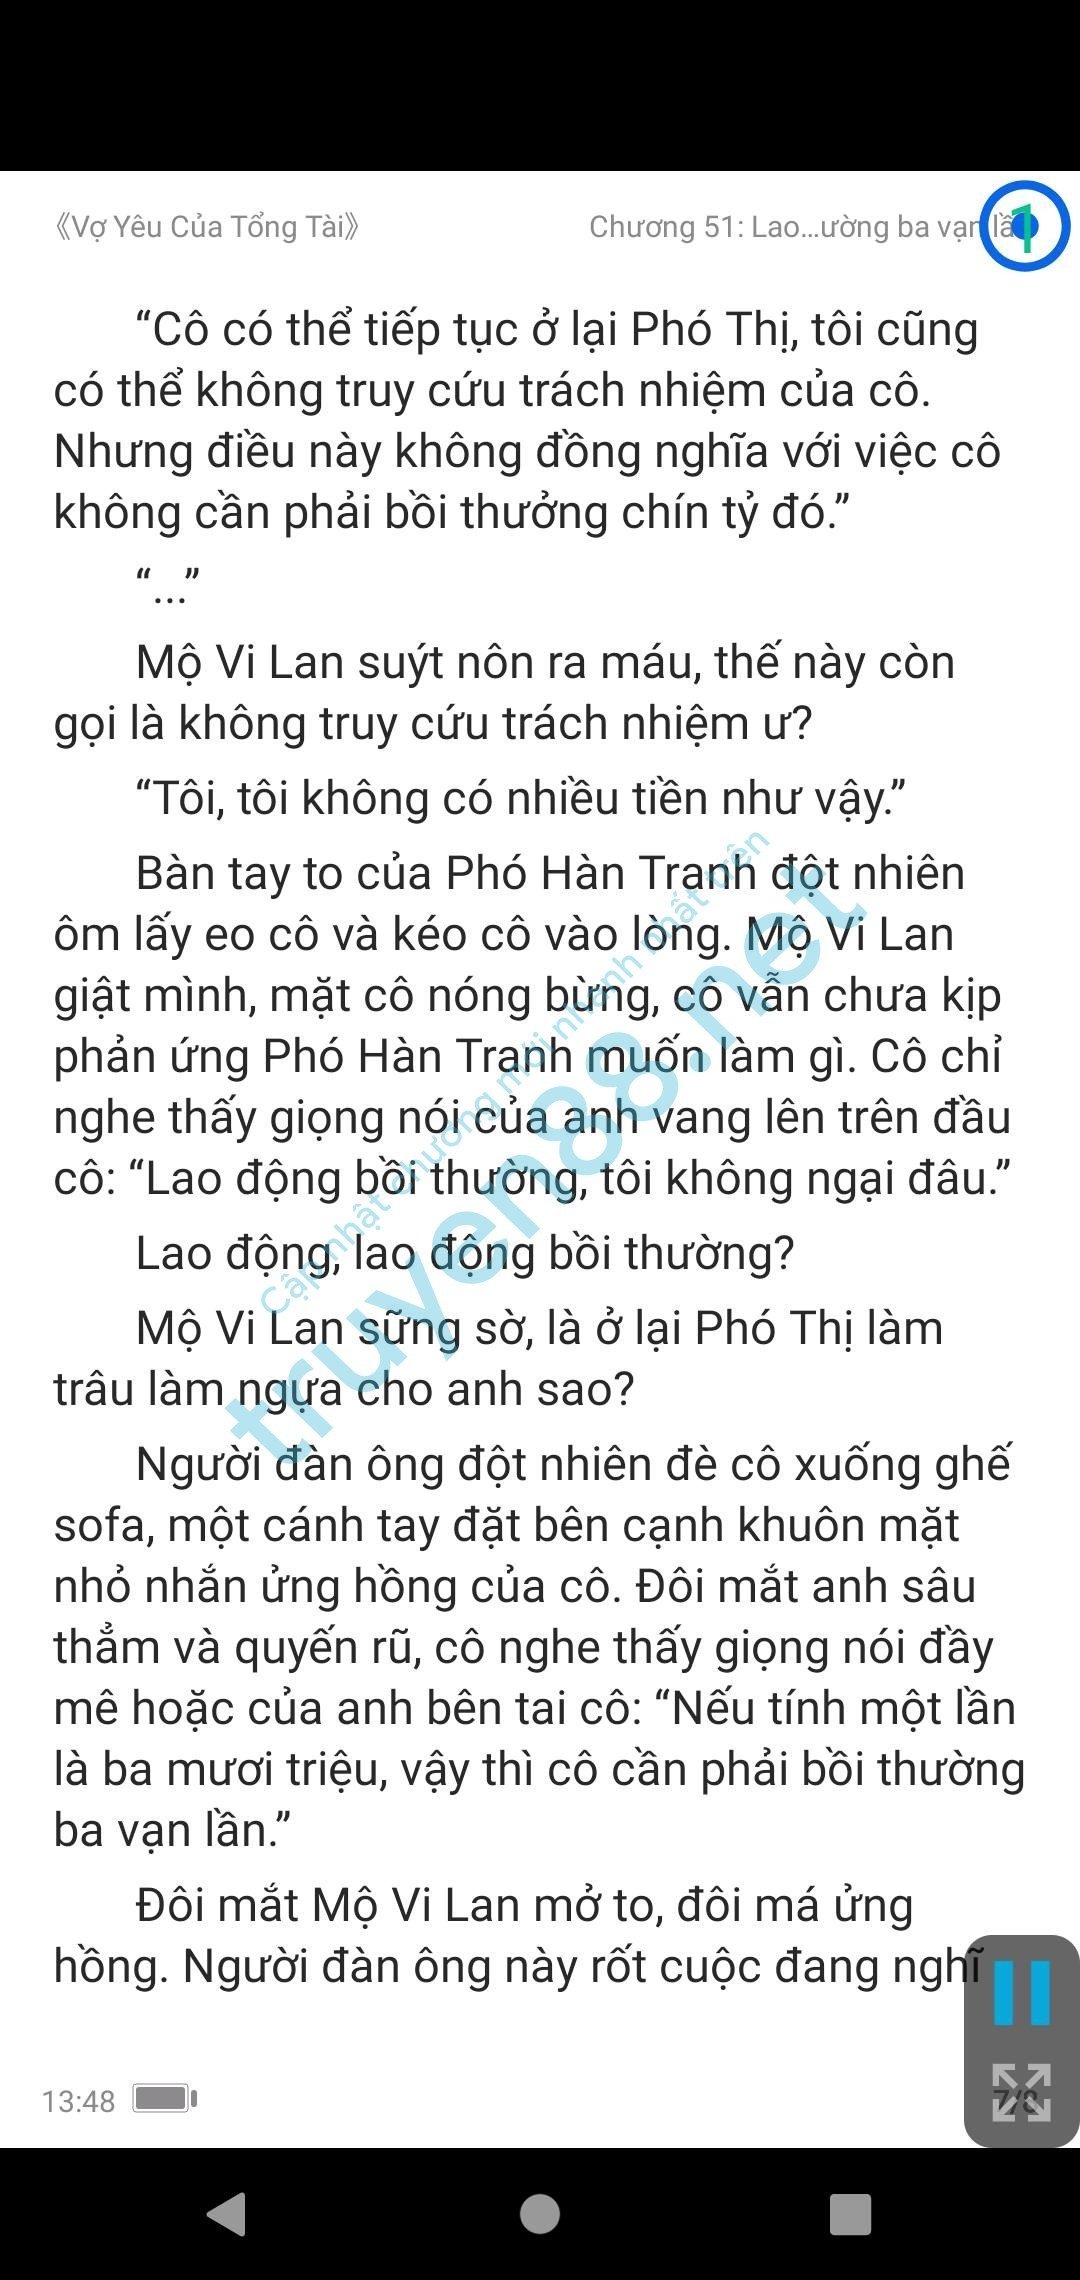 vo-yeu-cua-tong-tai-mo-vi-lan--pho-han-tranh-51-1